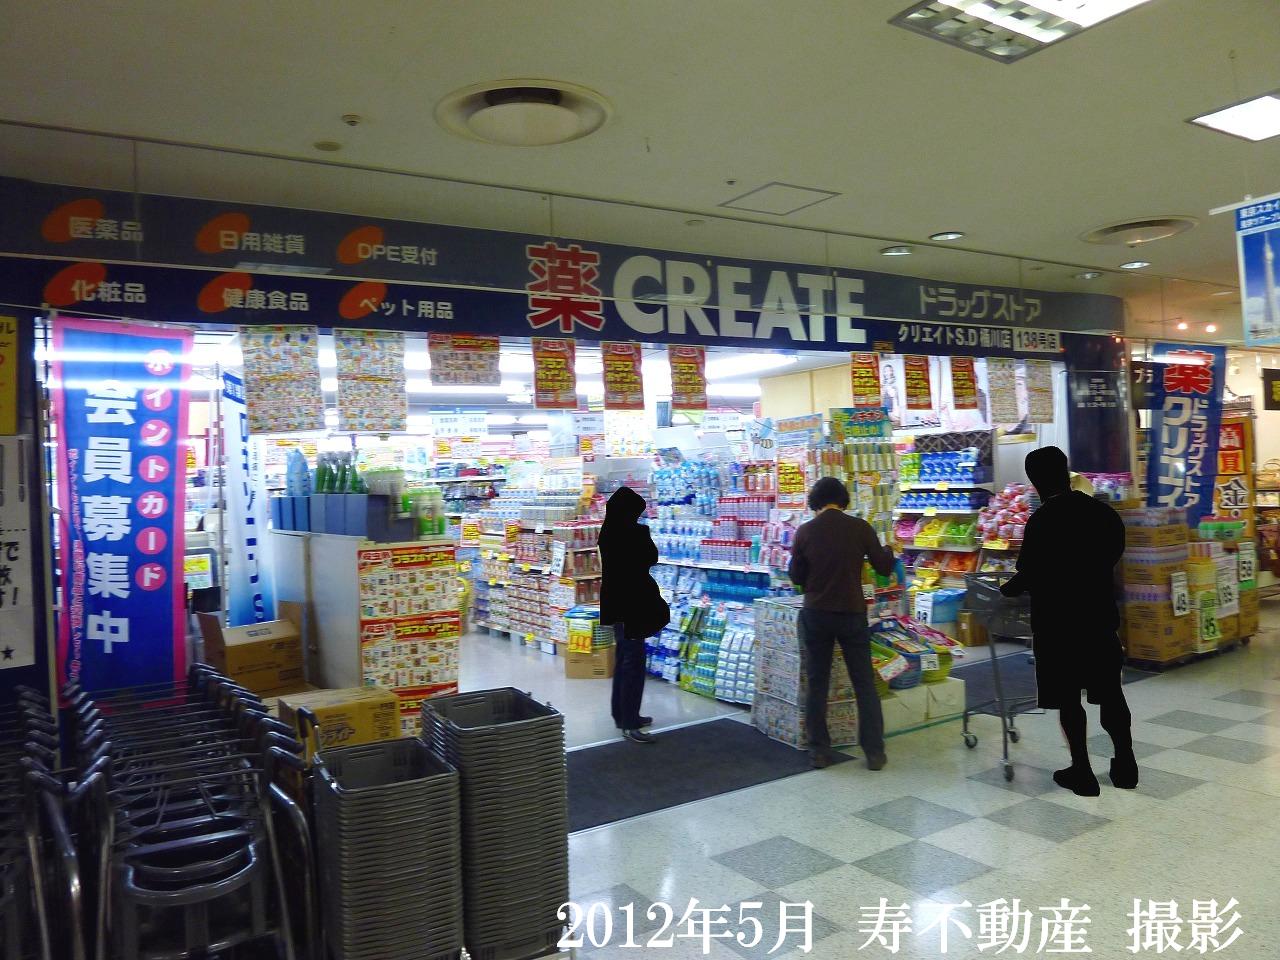 Dorakkusutoa. Create es ・ Dee Okegawa shop 639m until (drugstore)